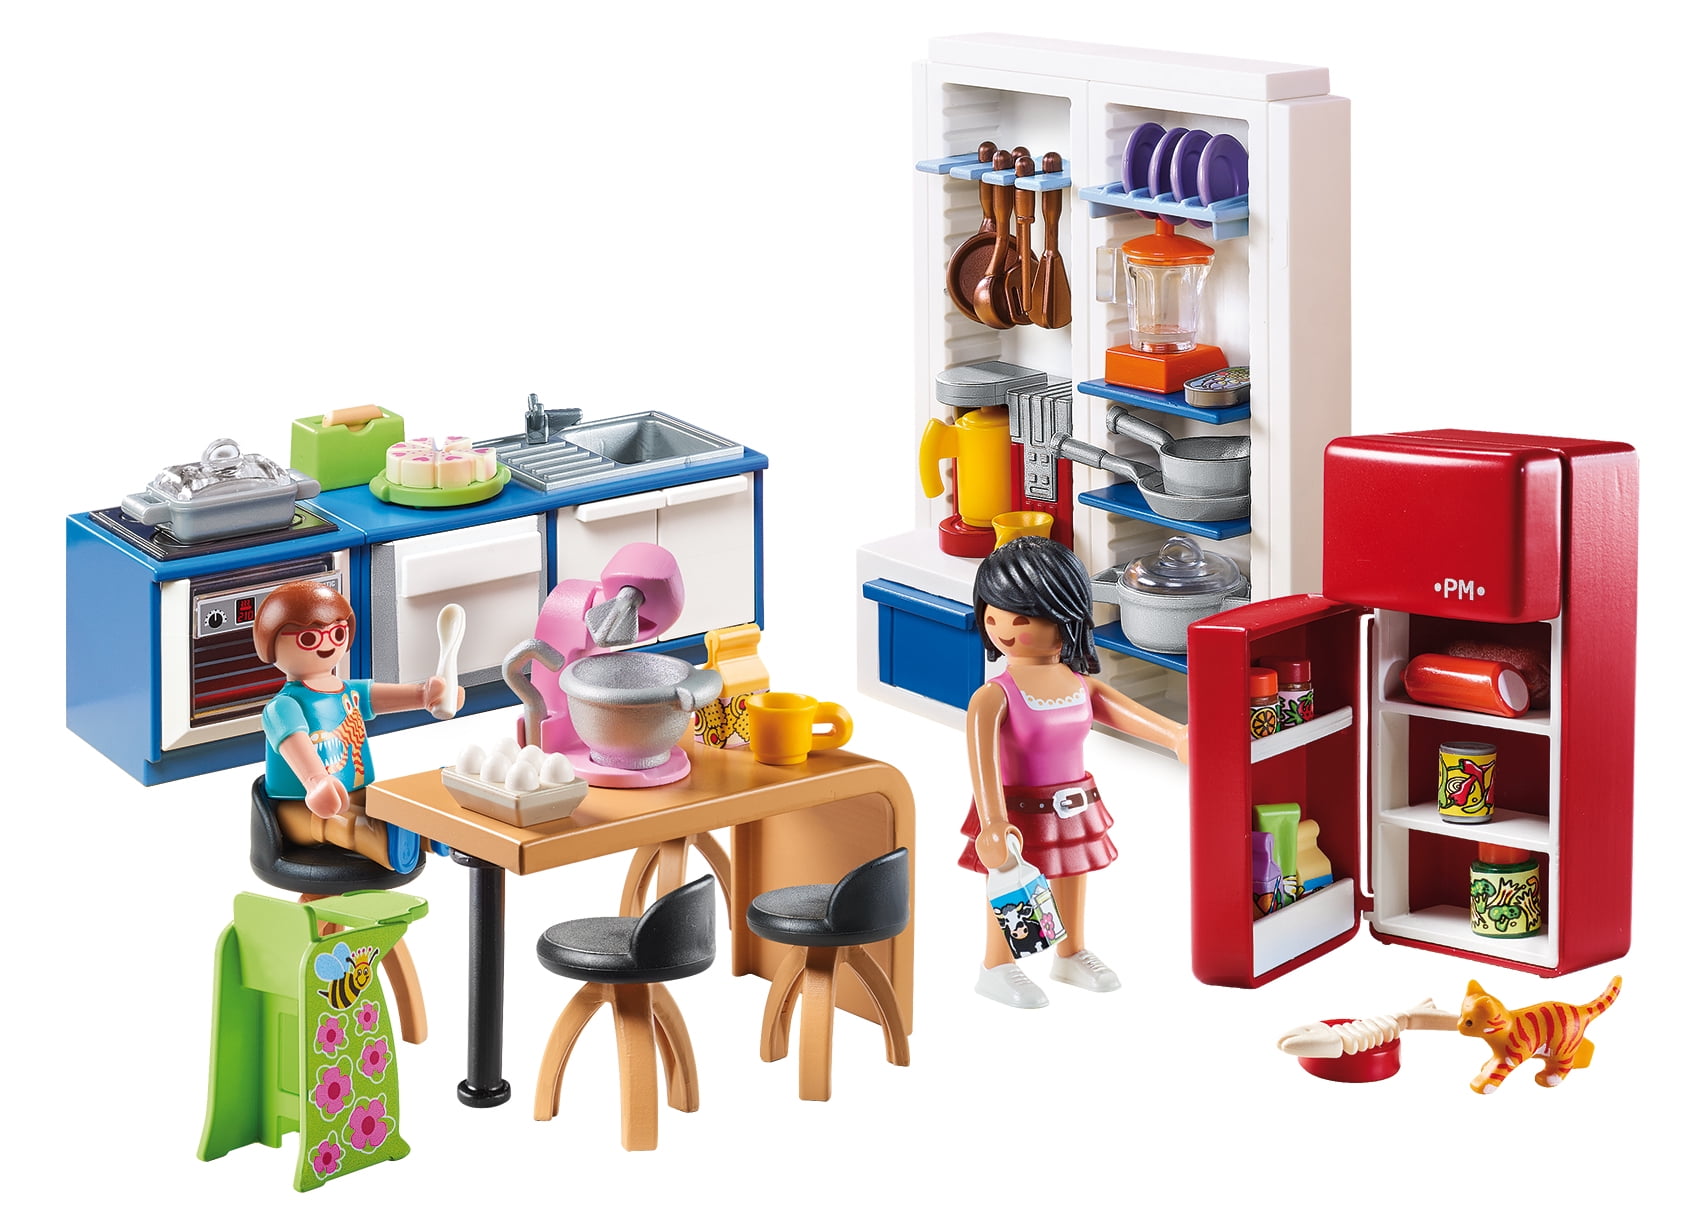 Playmobil kitchen MAGENTA & WHITE COUNTER UNIT W/ DISHWASHER CABINET SINK 